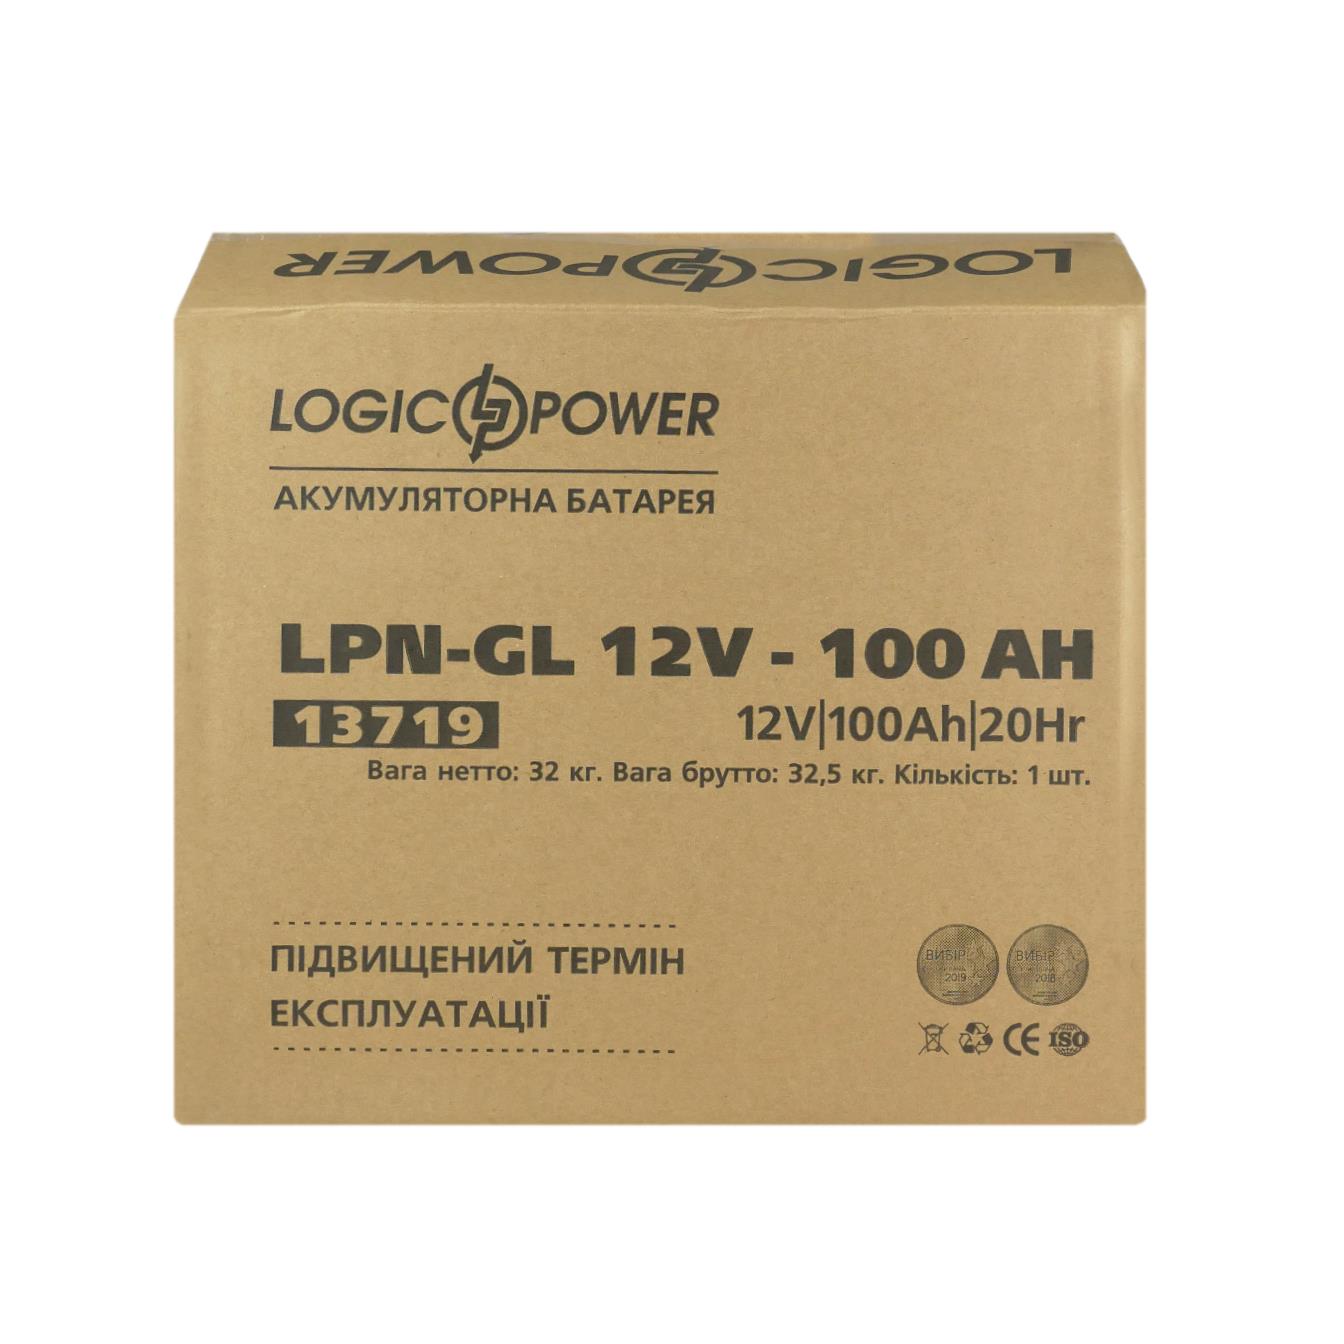 Акумулятор гелевий LogicPower LPN-GL 12V - 100 Ah (13719) огляд - фото 8